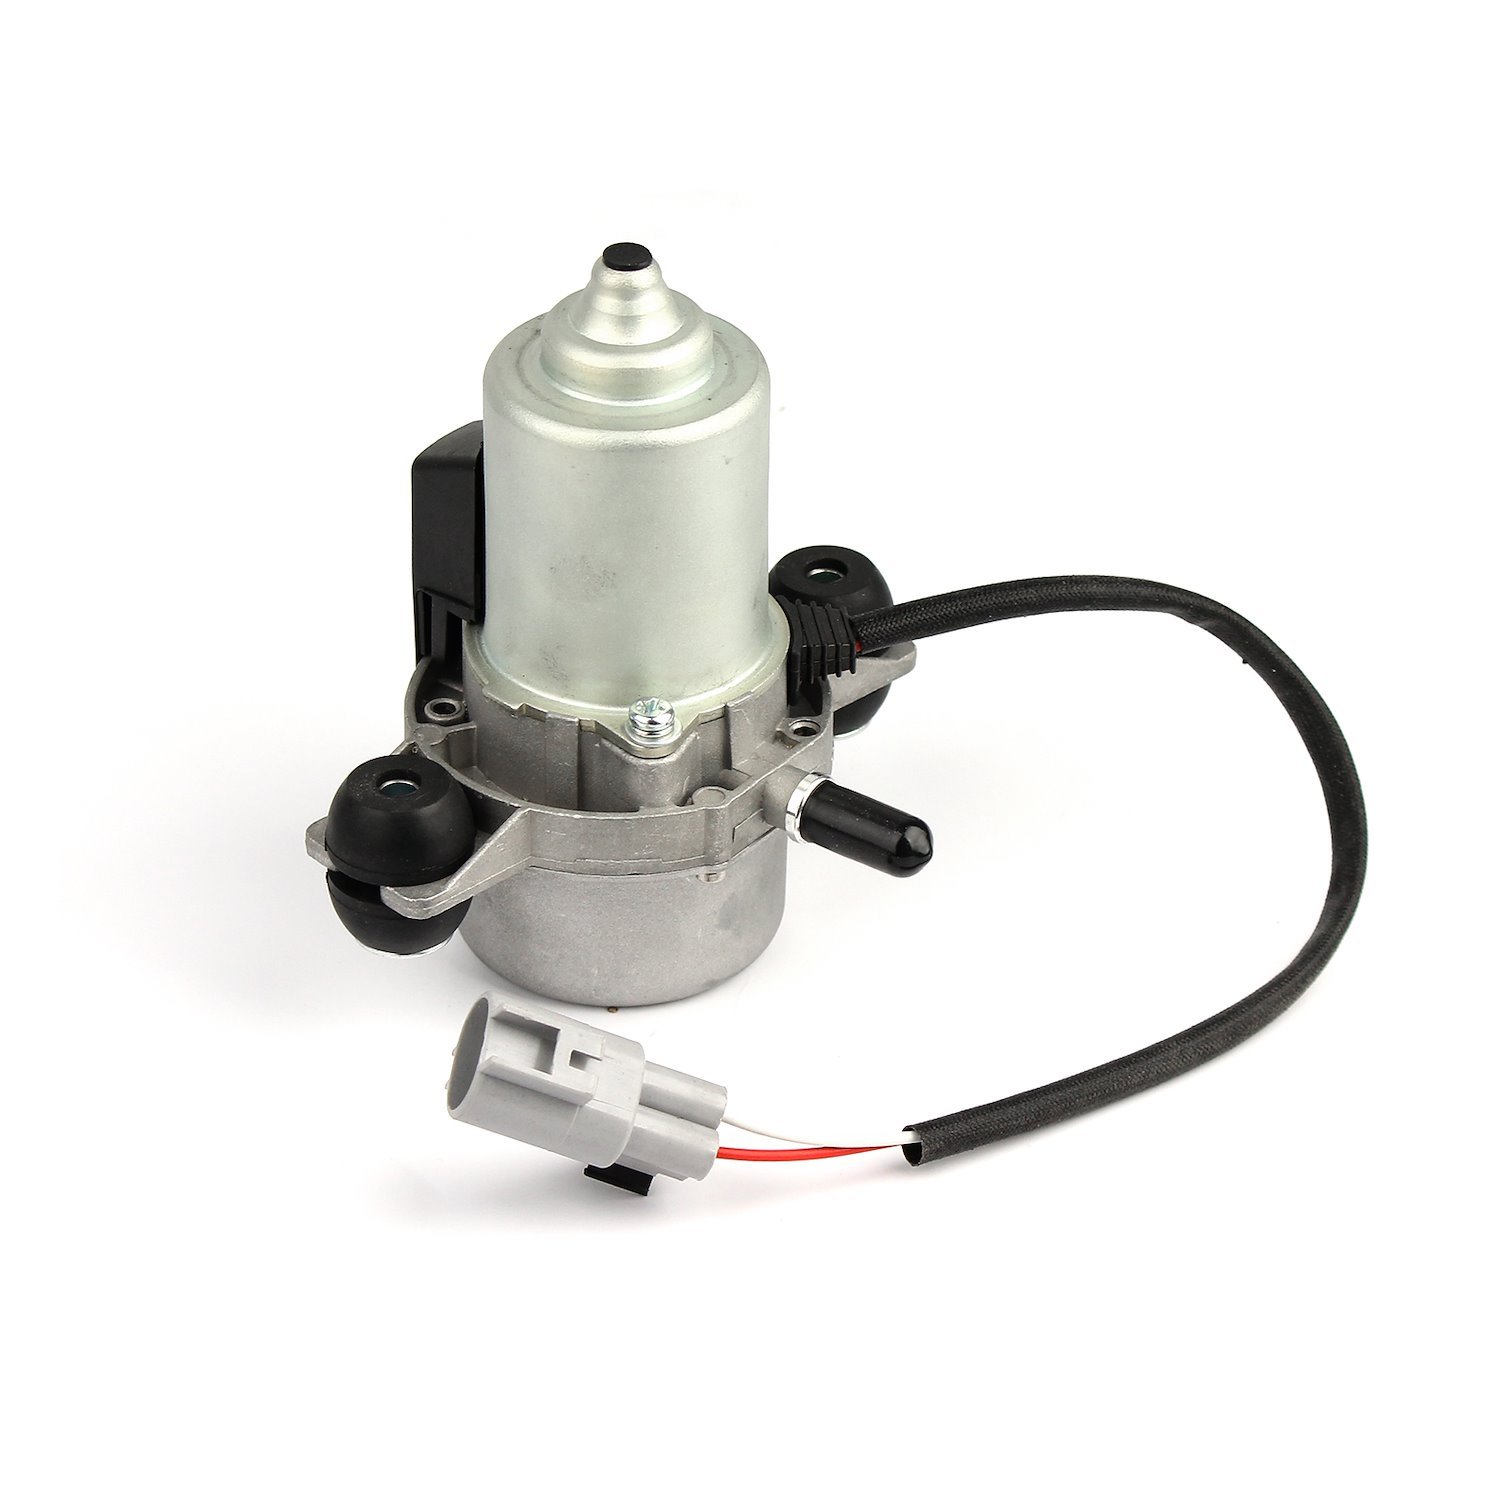 PCE490.1002 Power Brake Booster Vacuum Pump 12 V Includes Insulator Mounts